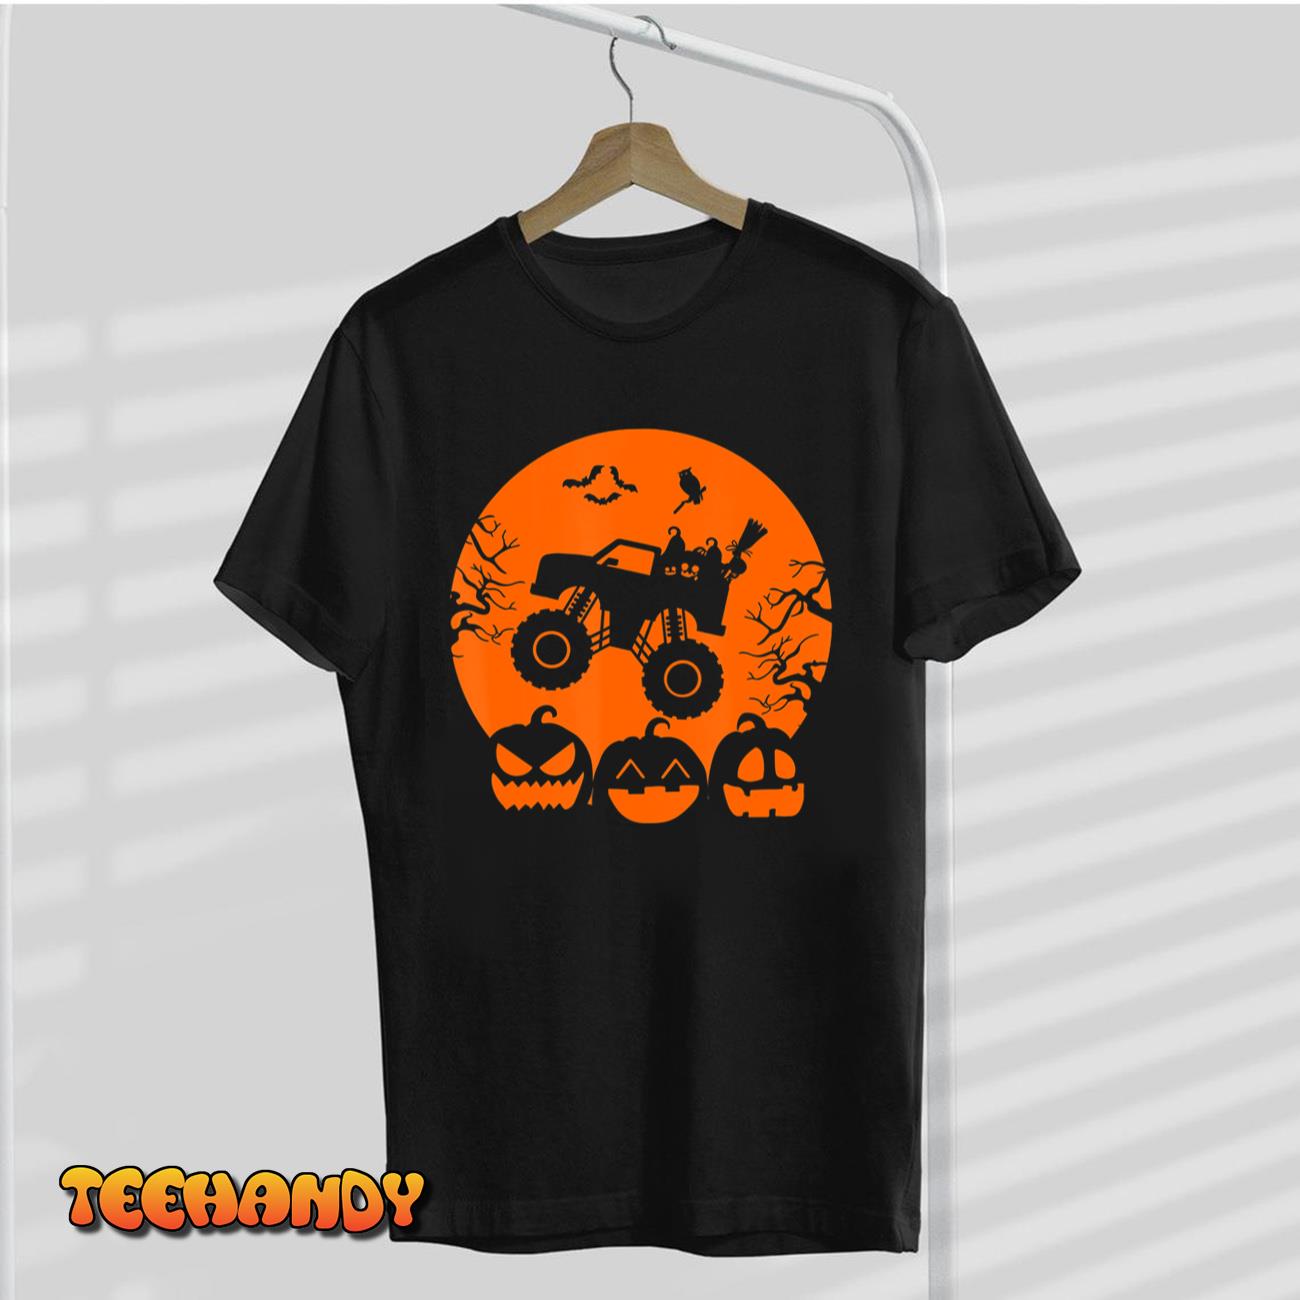 Truck or Treat Skeleton Monster Truck Moon Candy Halloween T-Shirt